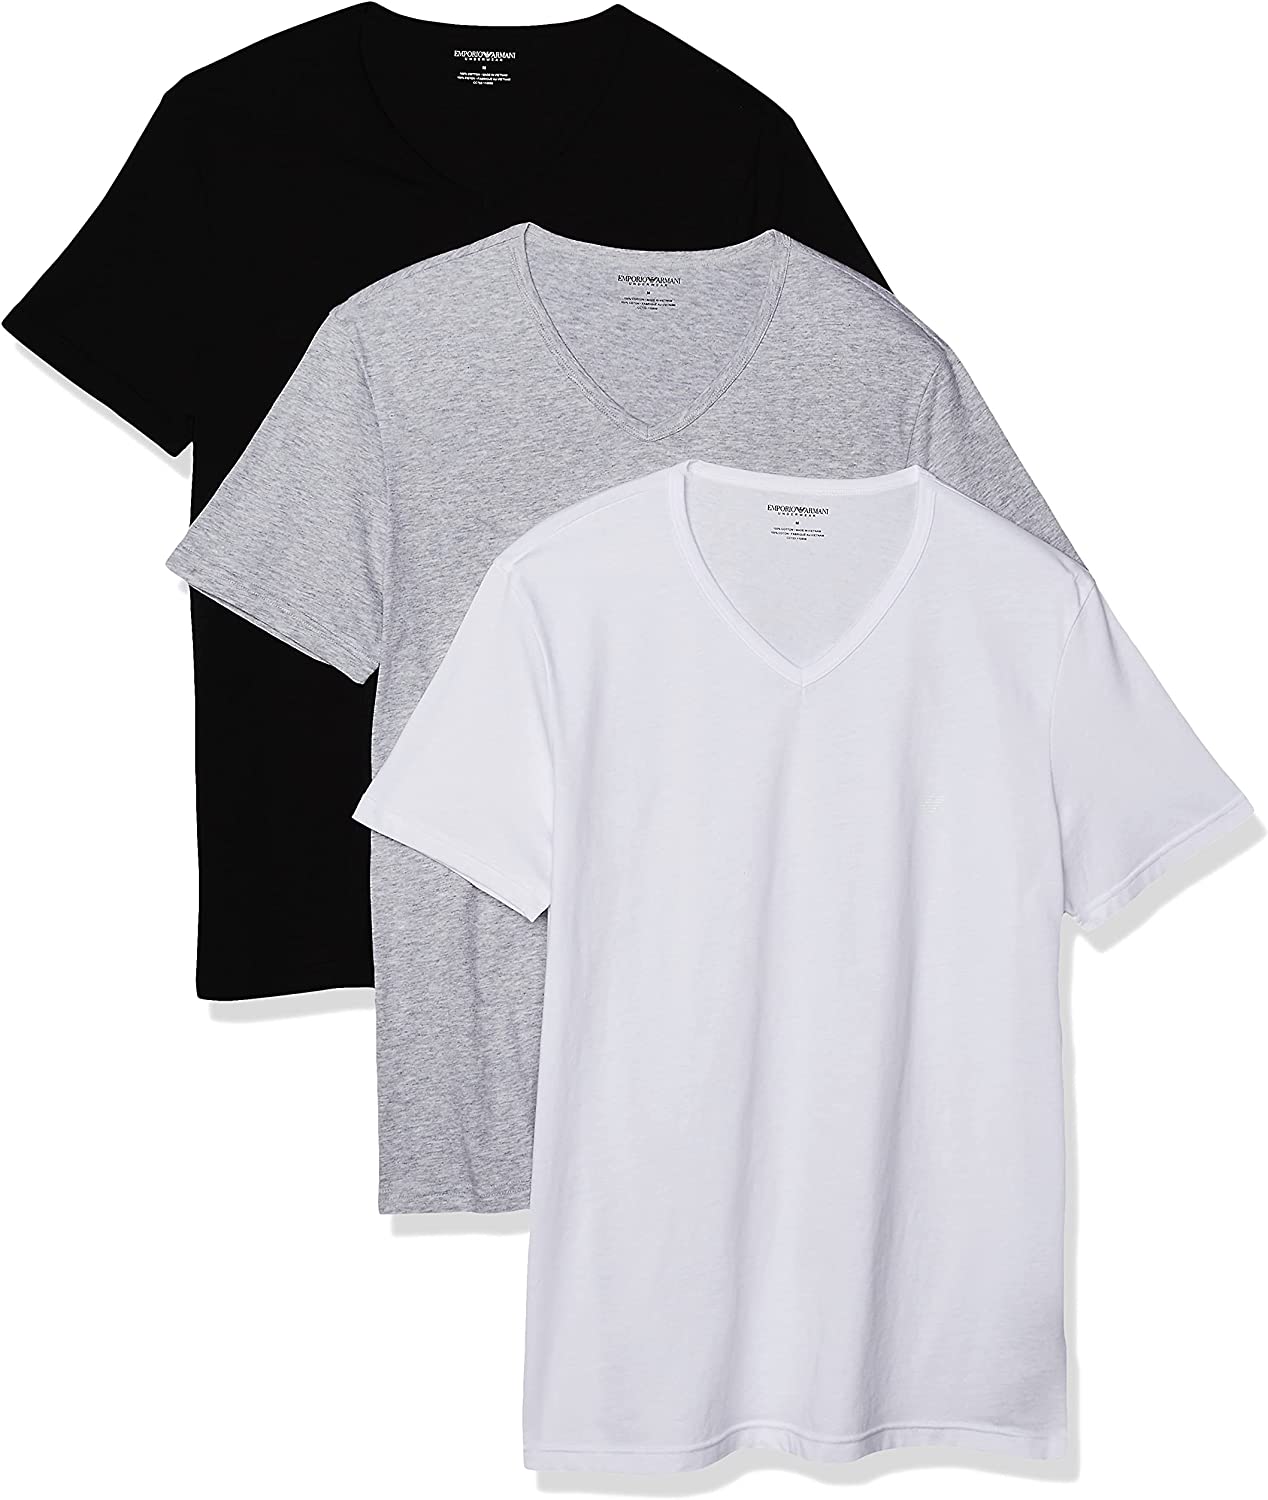 Emporio Armani Pure Cotton Men's V-Neck T Shirt, Pack of 3, Black, Grey, White - XL